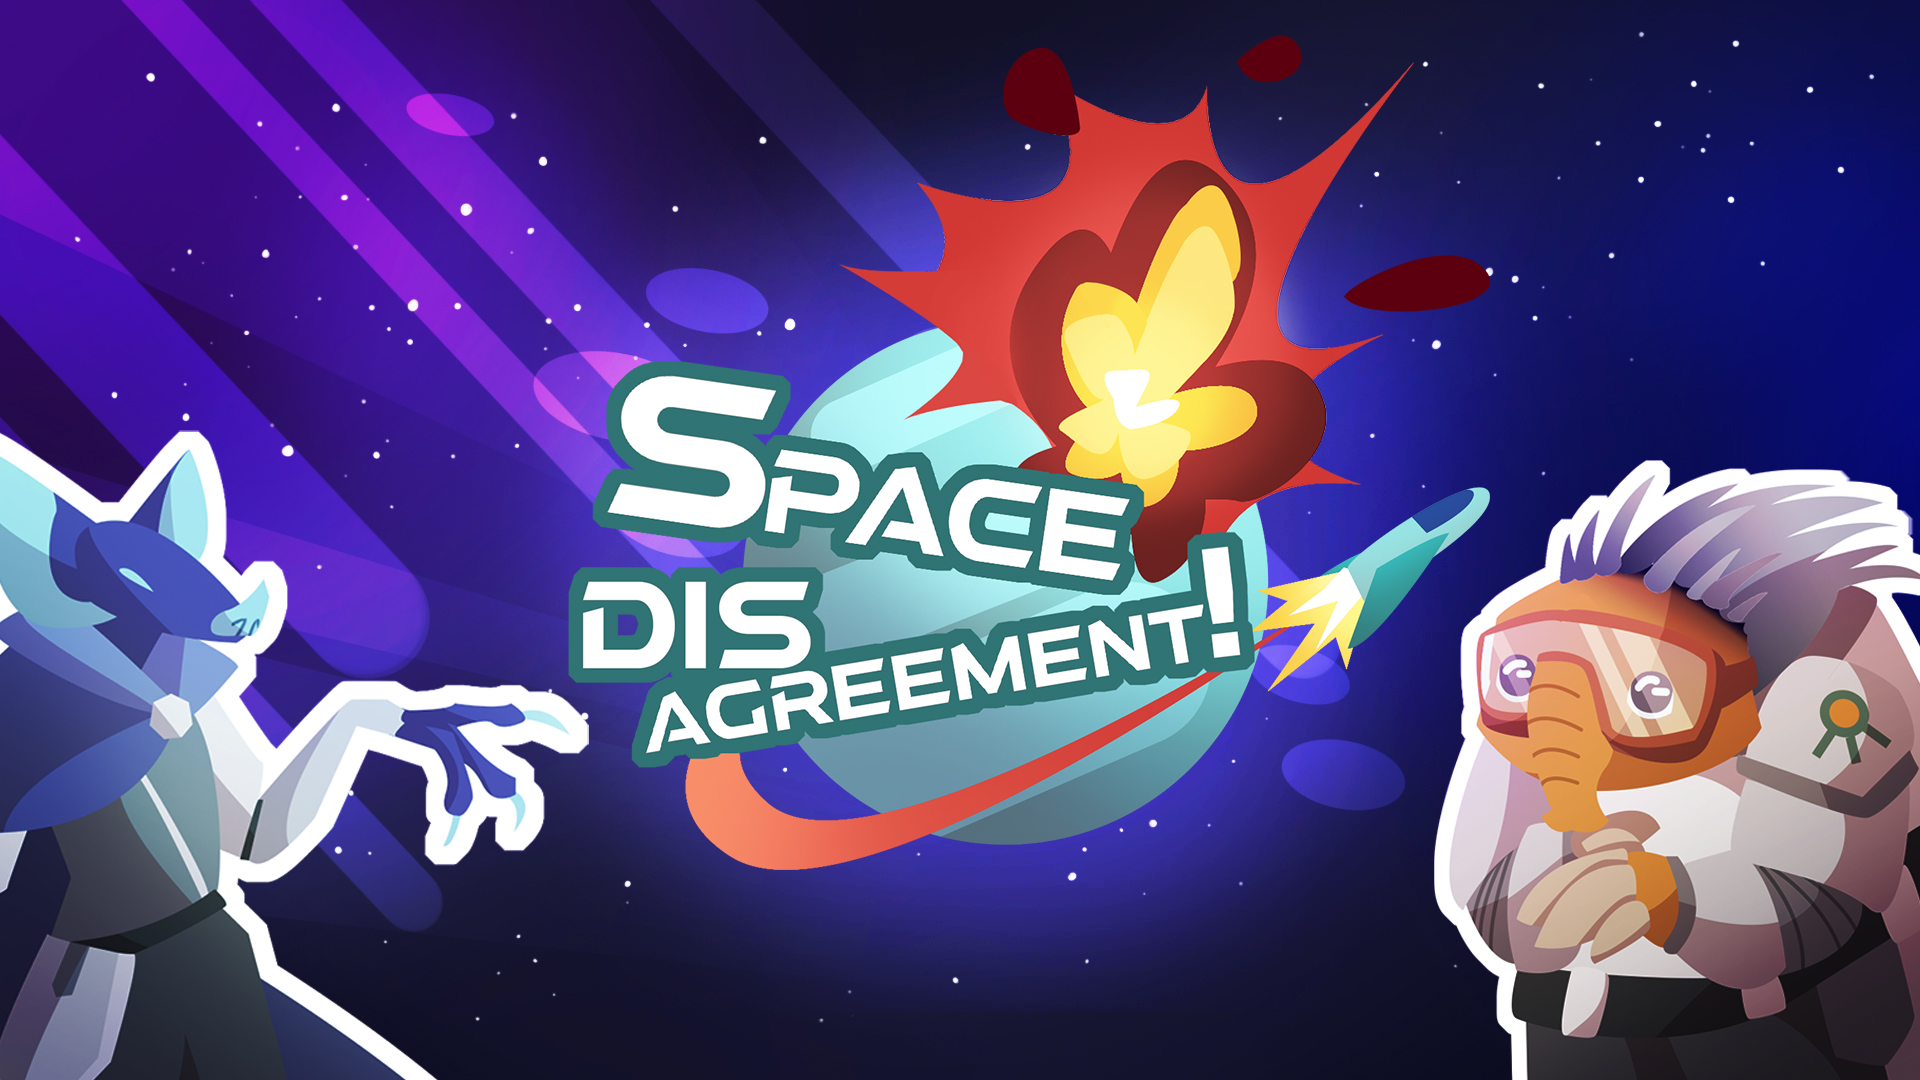 Space Disagreement!